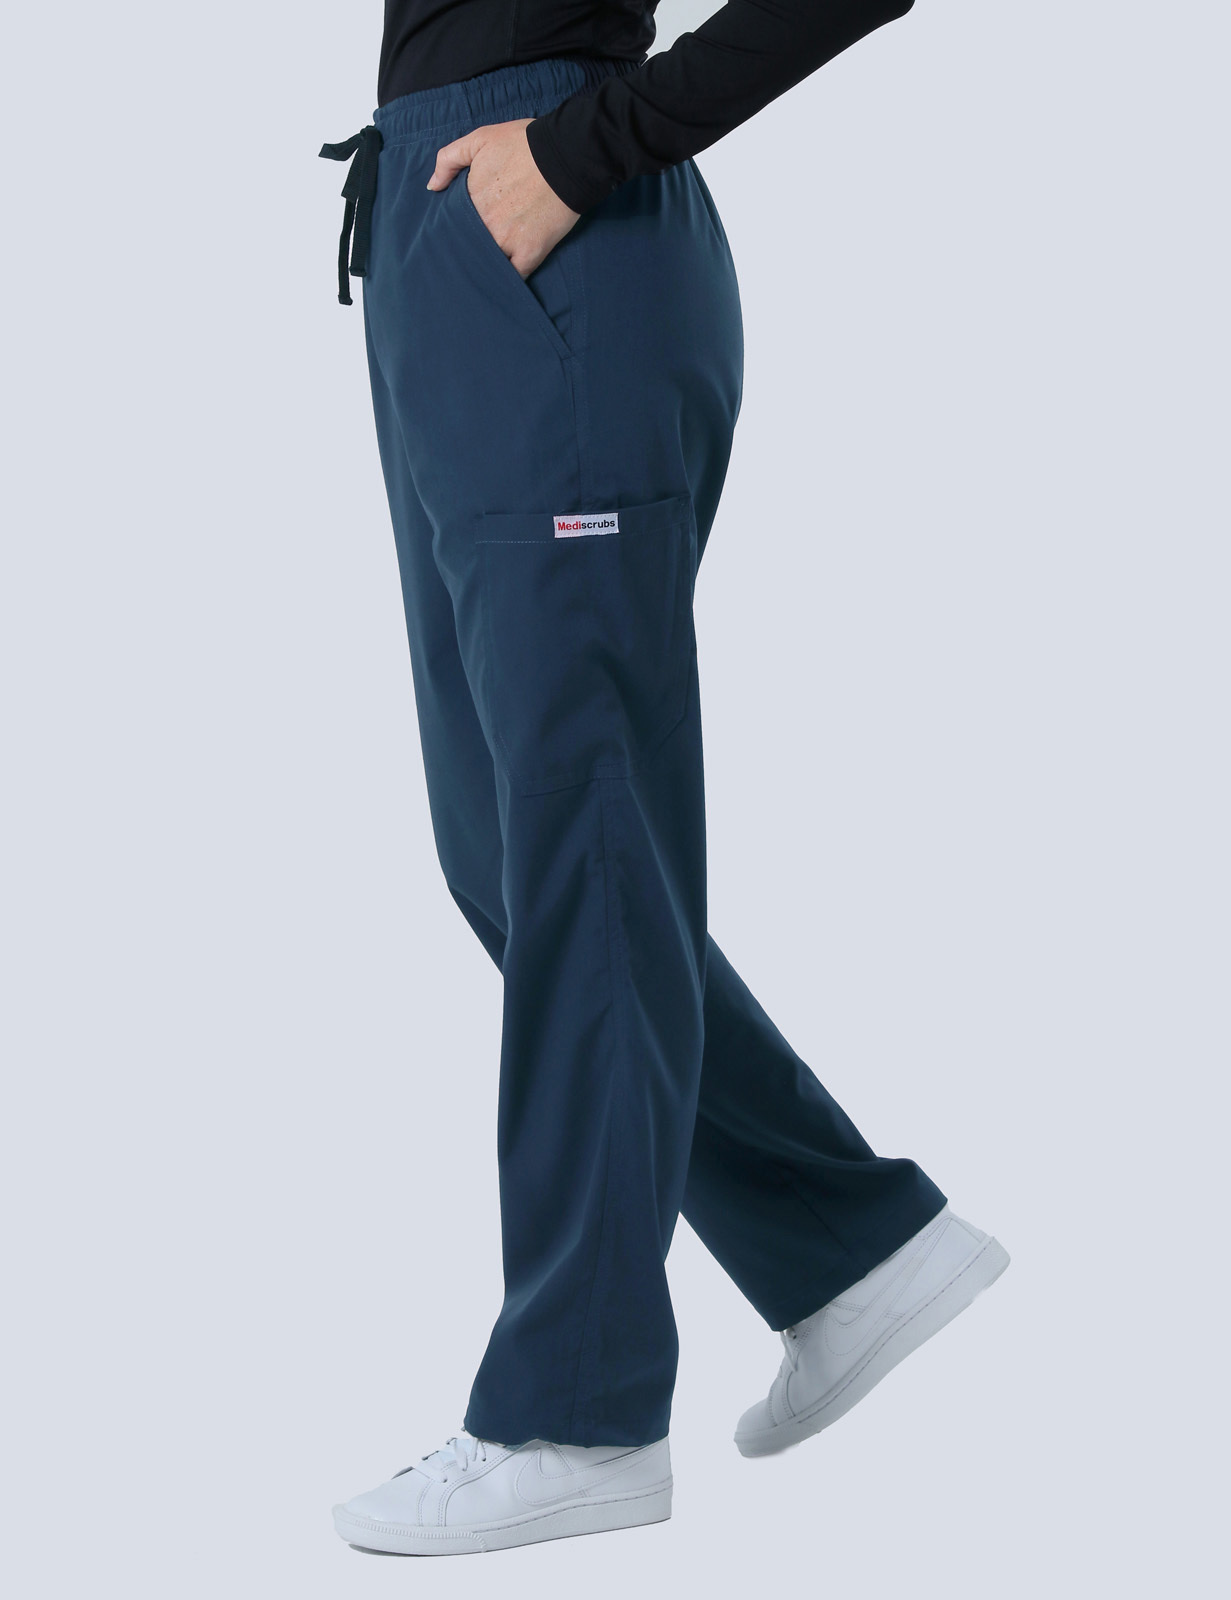 Women's Cargo Performance Pants - Navy - Medium